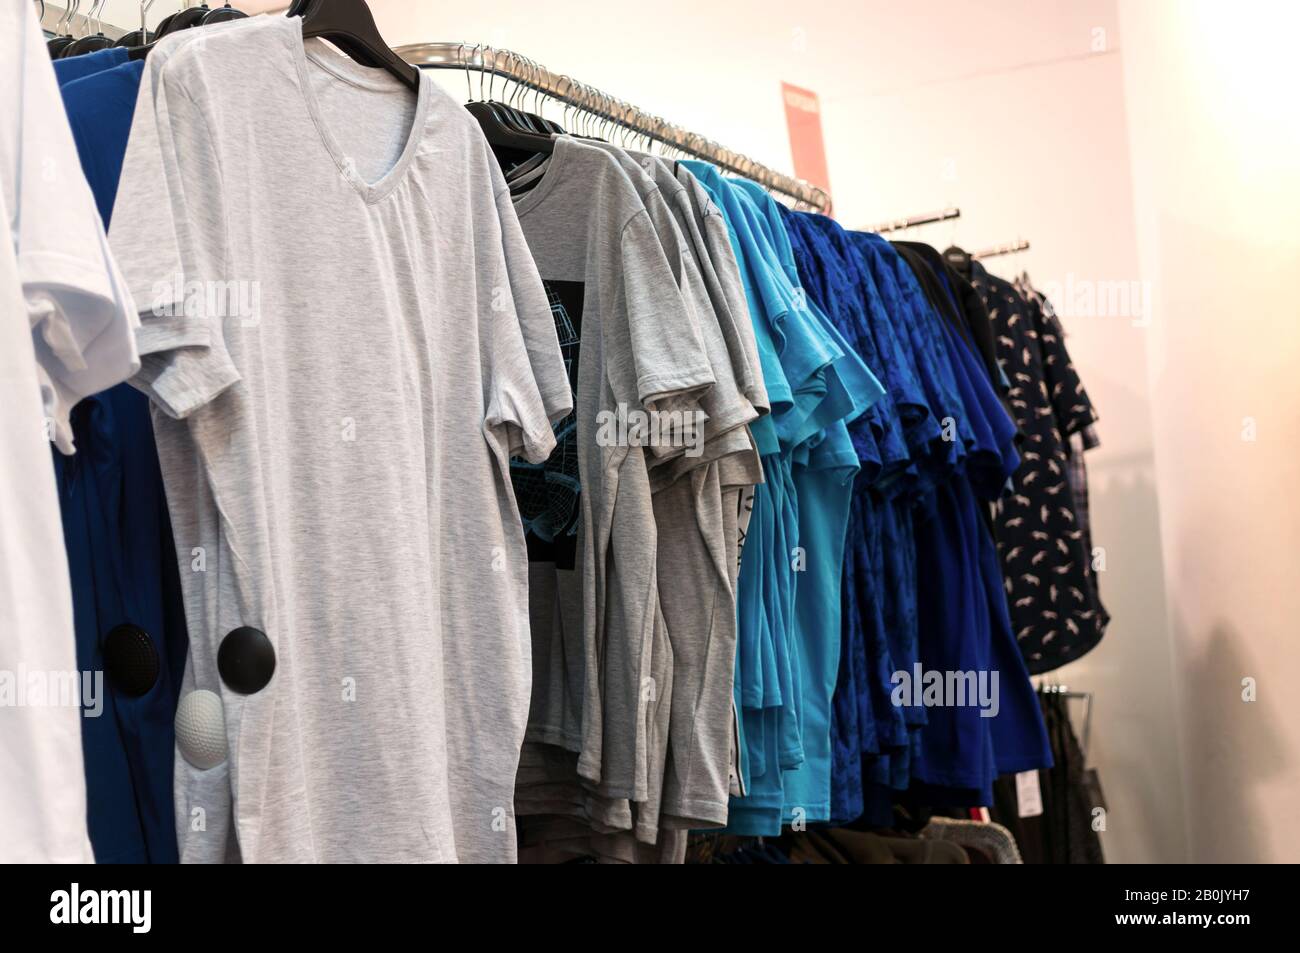 https://c8.alamy.com/comp/2B0JYH7/mens-t-shirts-on-hangers-in-a-clothing-store-2B0JYH7.jpg